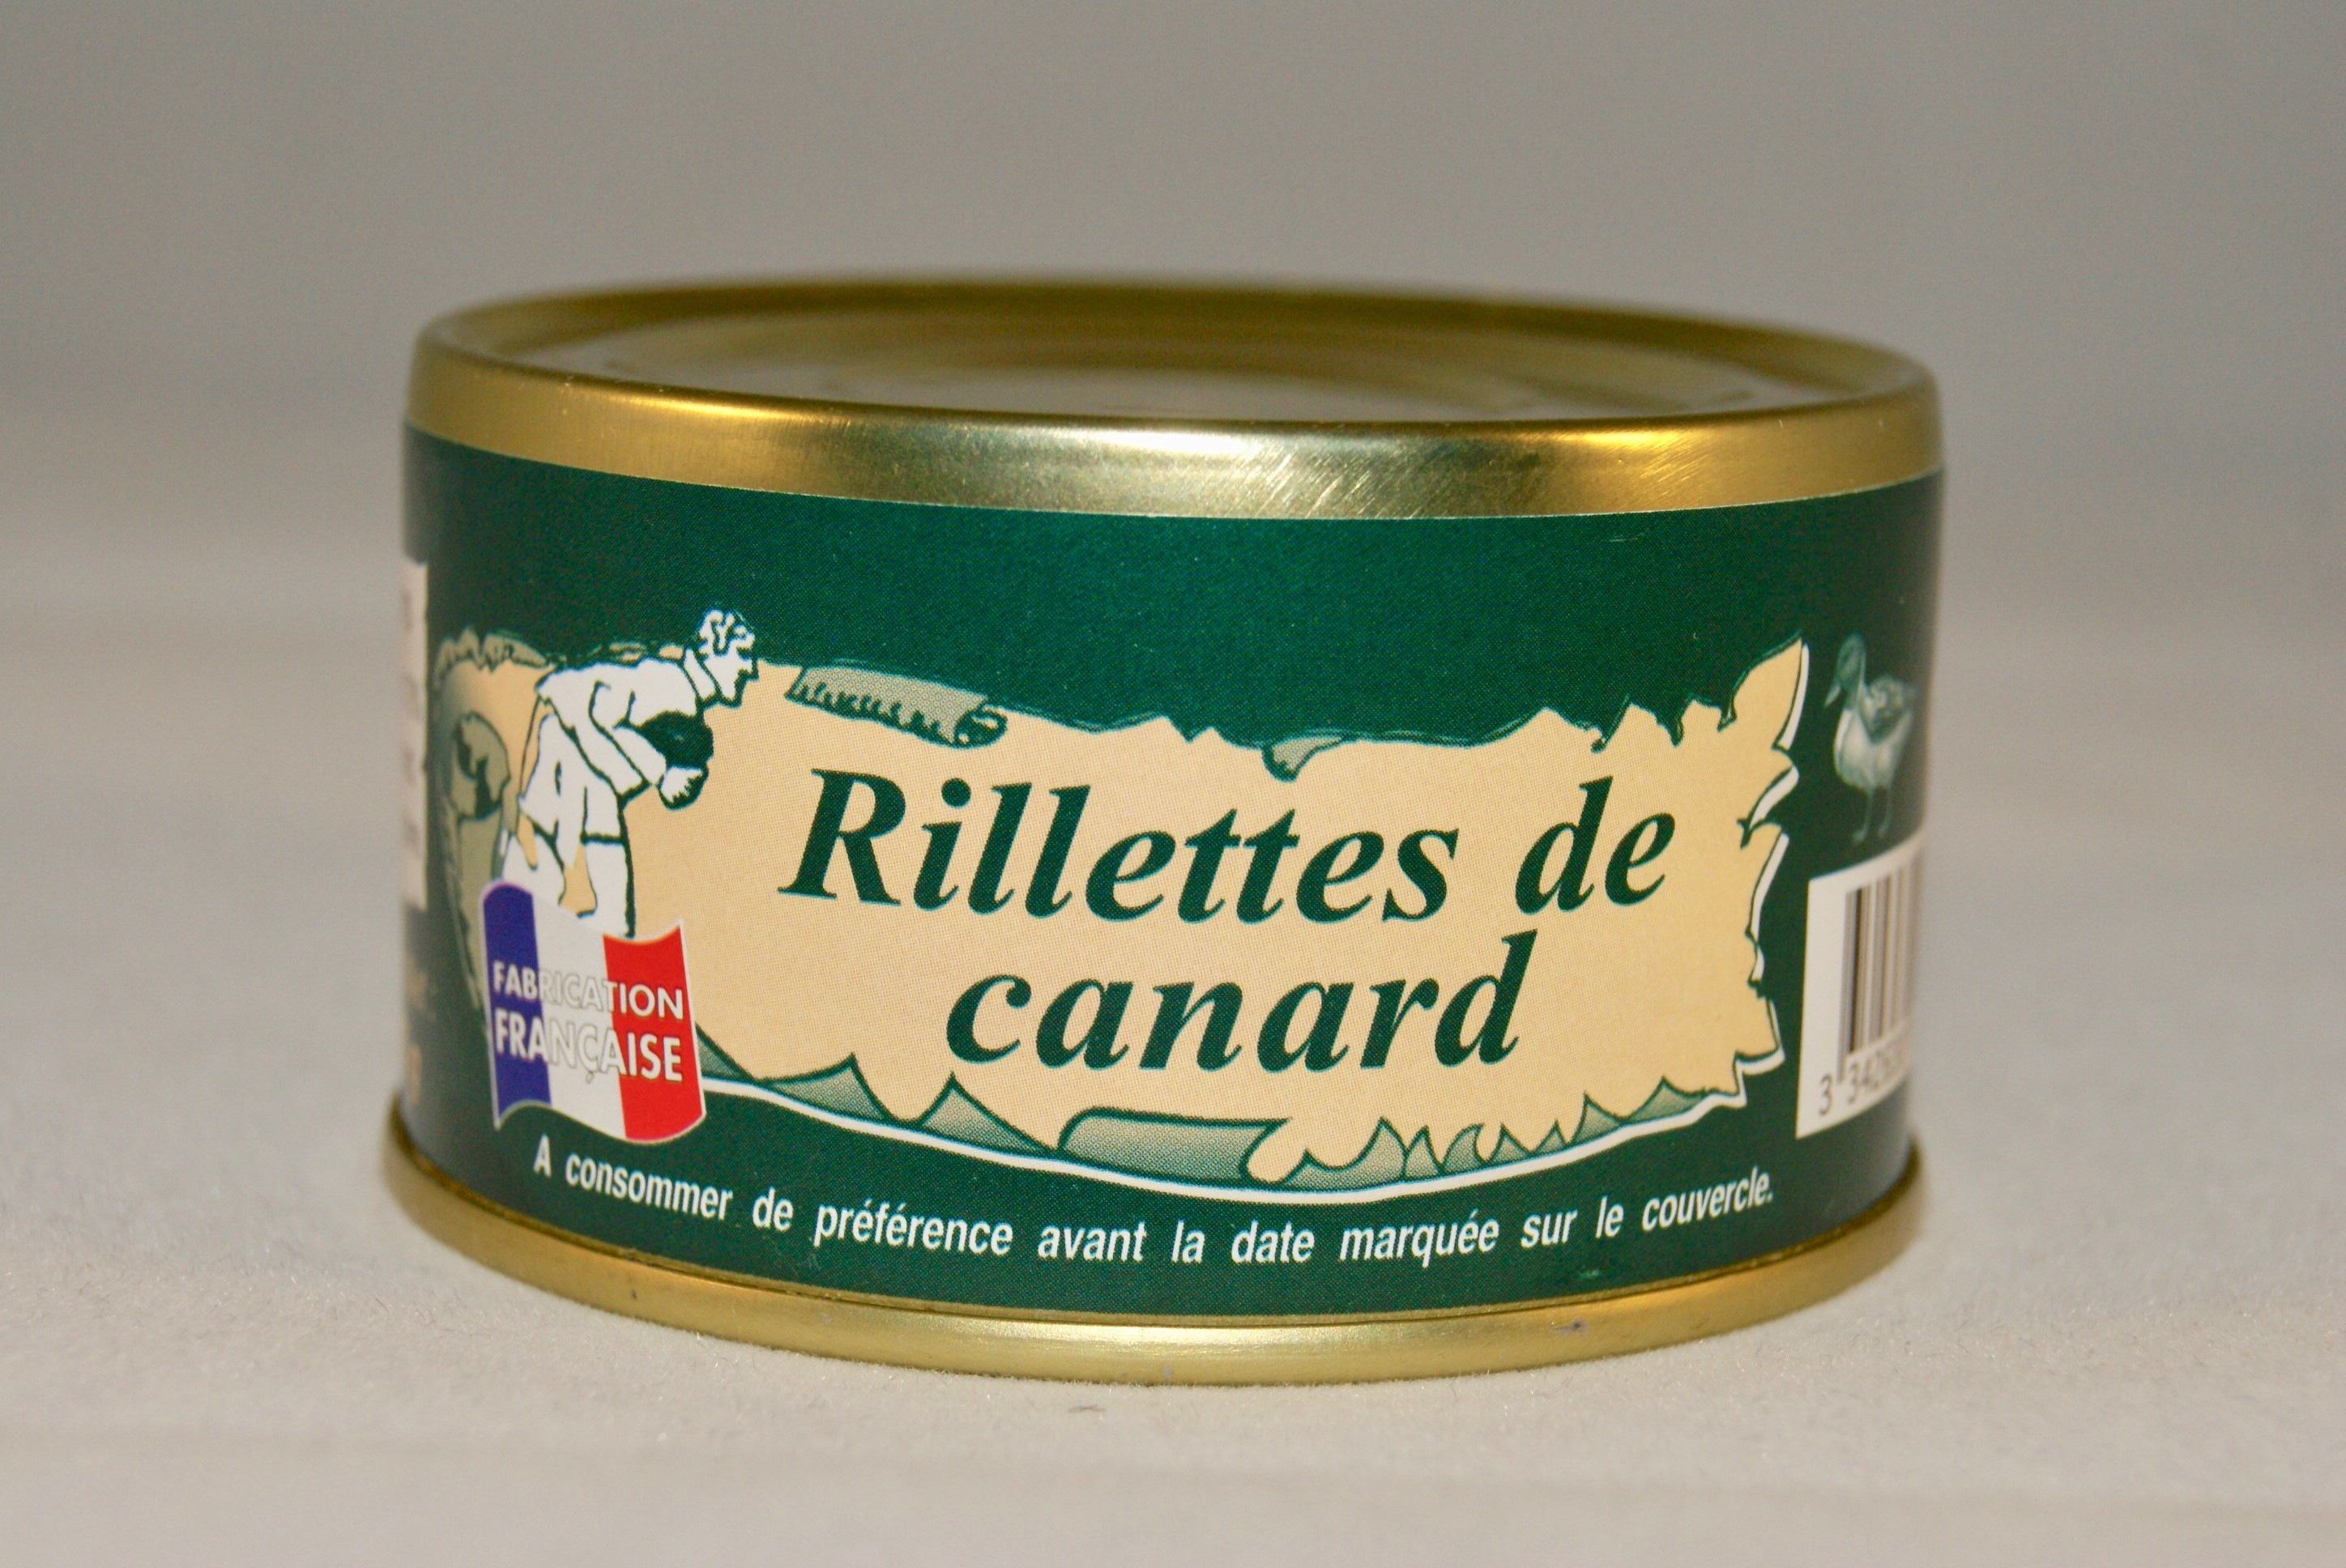 RILLETTES DE CANARD